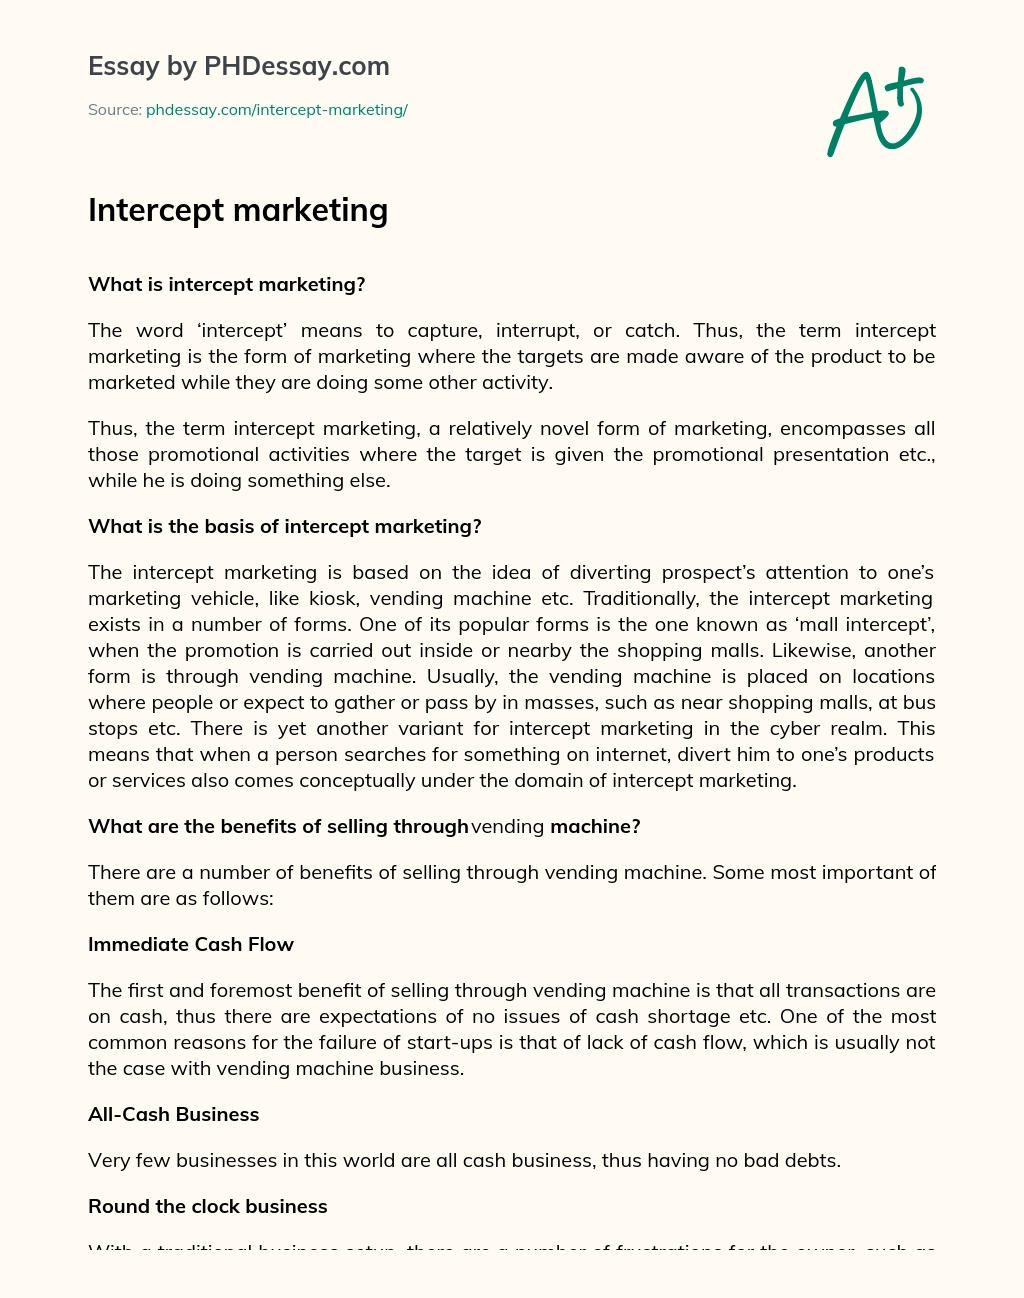 Intercept Marketing and Vending Machines essay